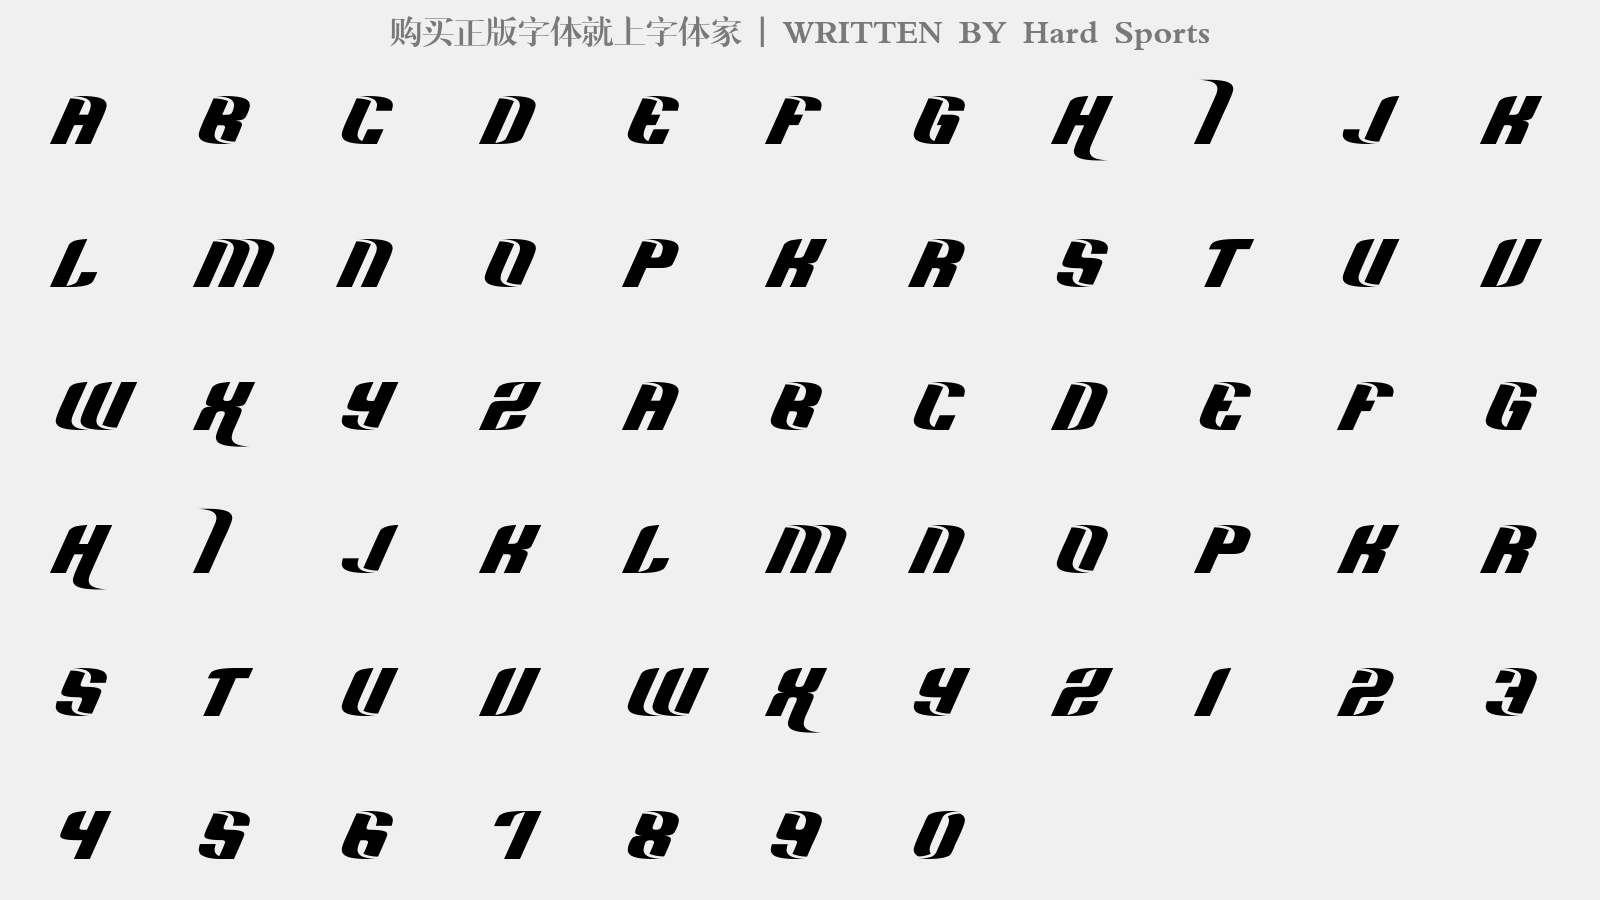 Hard Sports - 大写字母/小写字母/数字